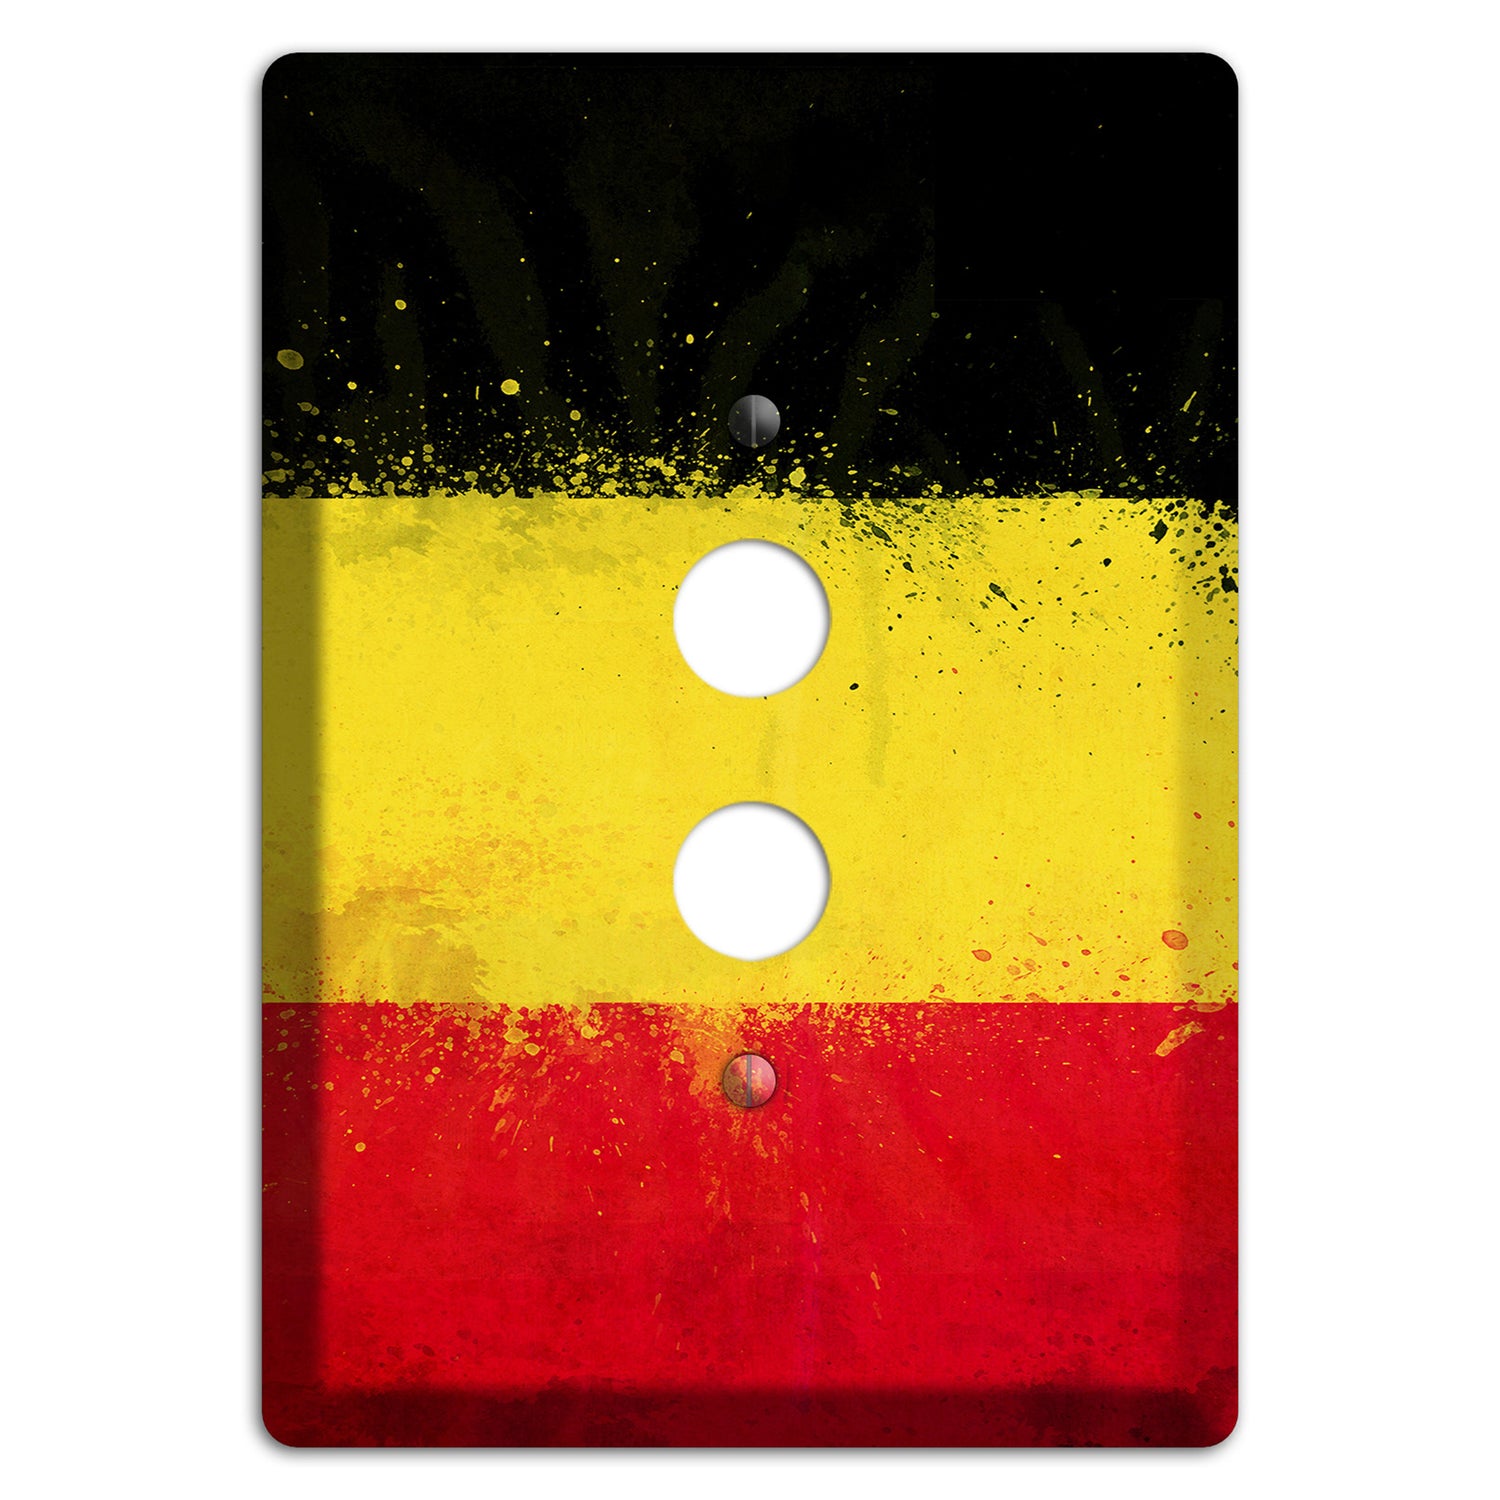 Belgium Cover Plates 1 Pushbutton Wallplate